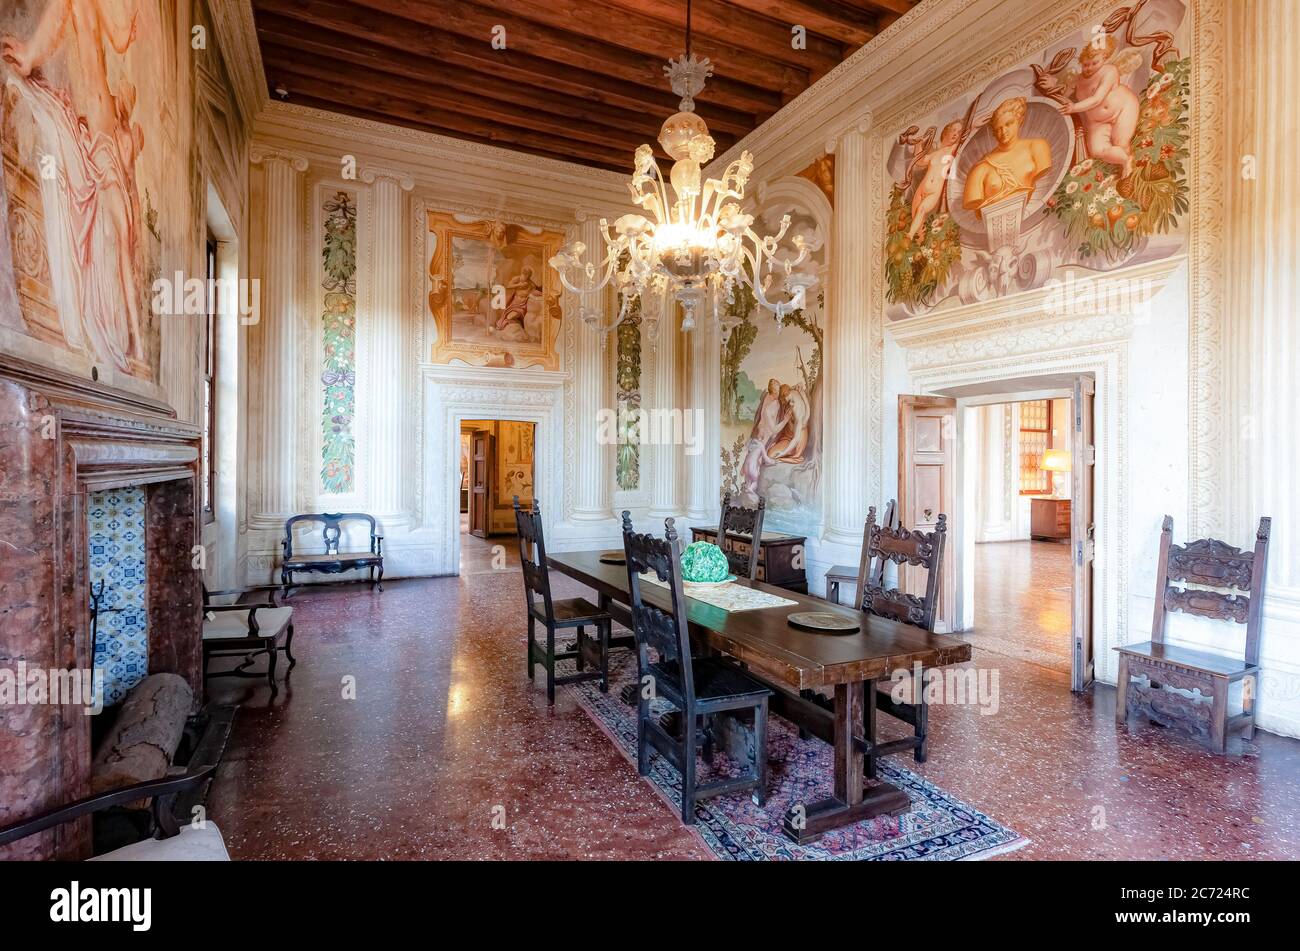 Italie Veneto Fanzolo Villa Emo - architecte Andrea Palladio - la salle de Vénus - fresques de Battista Zelotti Banque D'Images